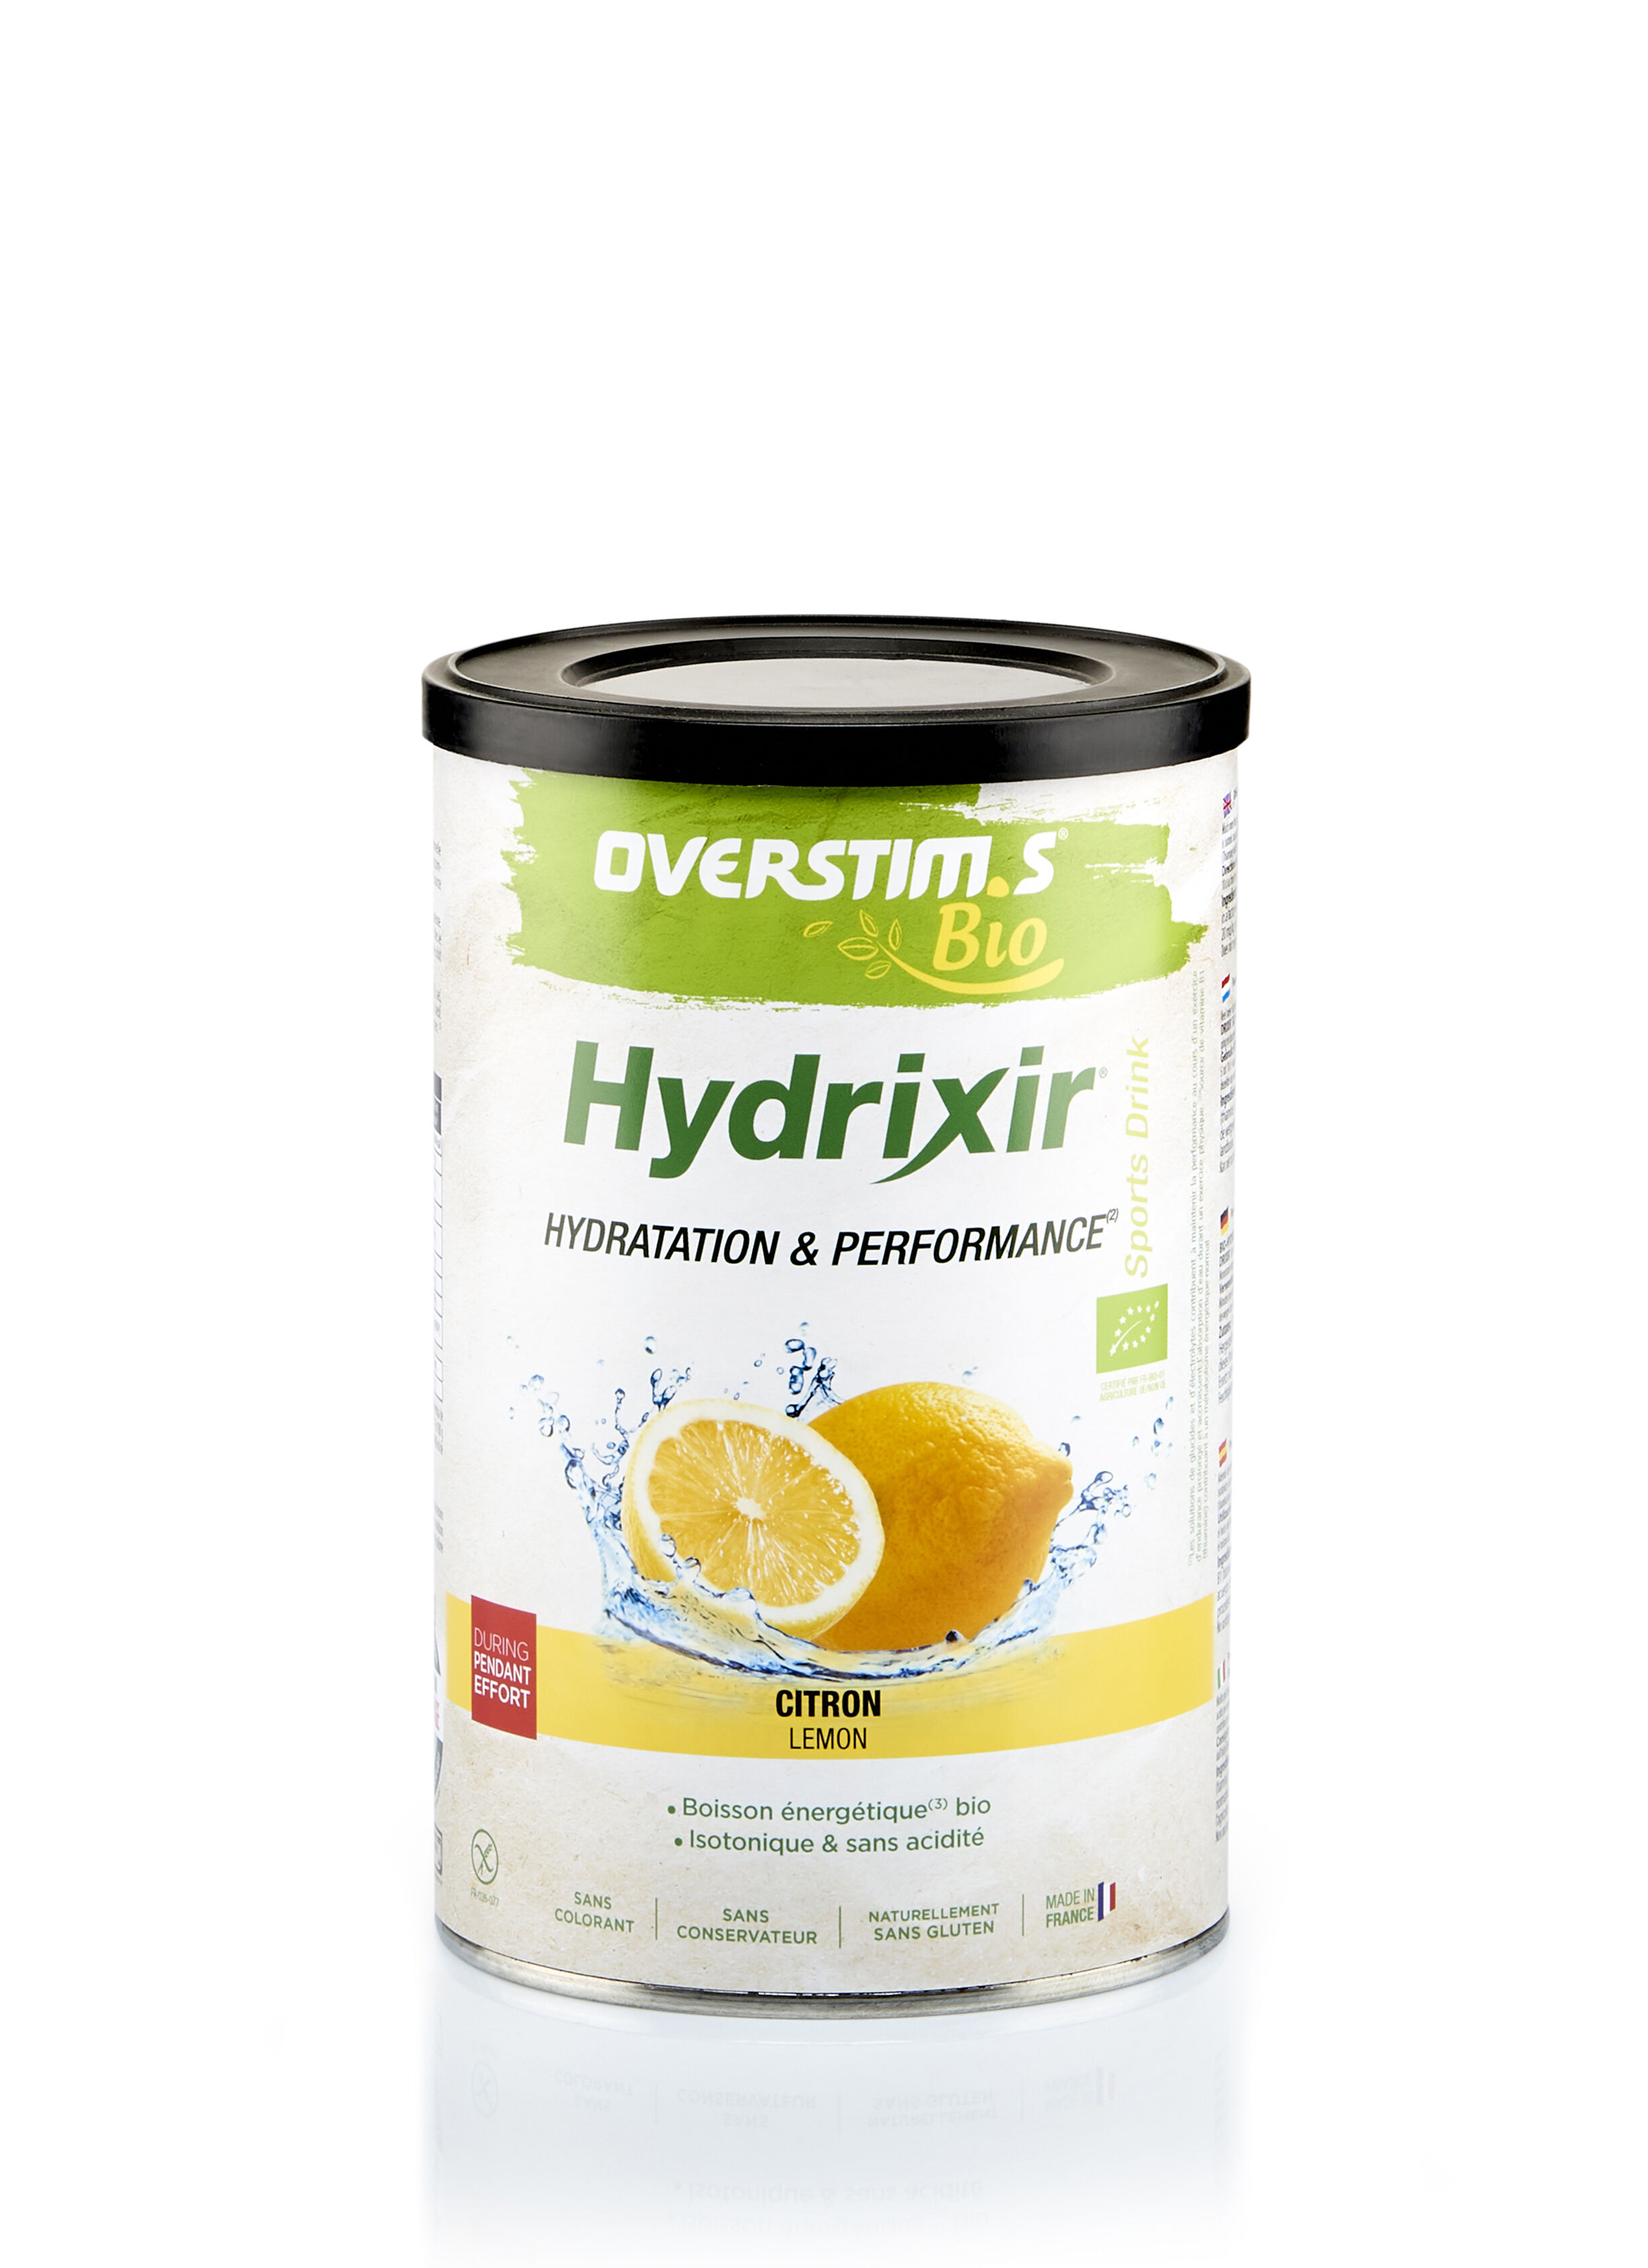 Overstim.s Hydrixir Antioxydant Bio - Napój energetyczny | Hardloop